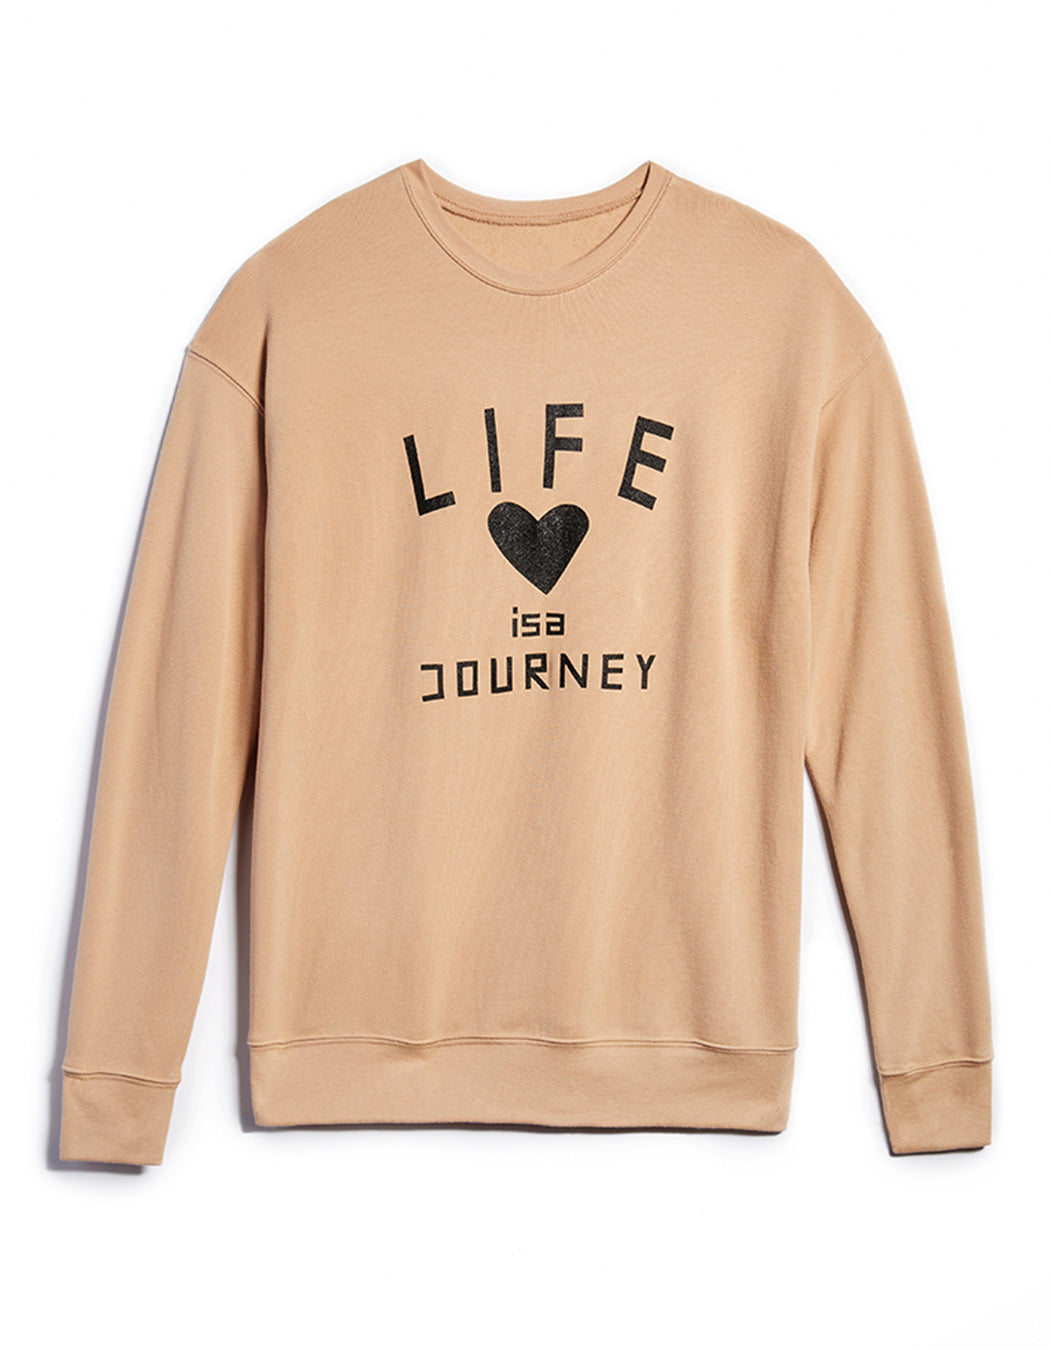 Unisex LIFE JOURNEY / TAN Sweatshirt ONW-JRNY-207-TAN